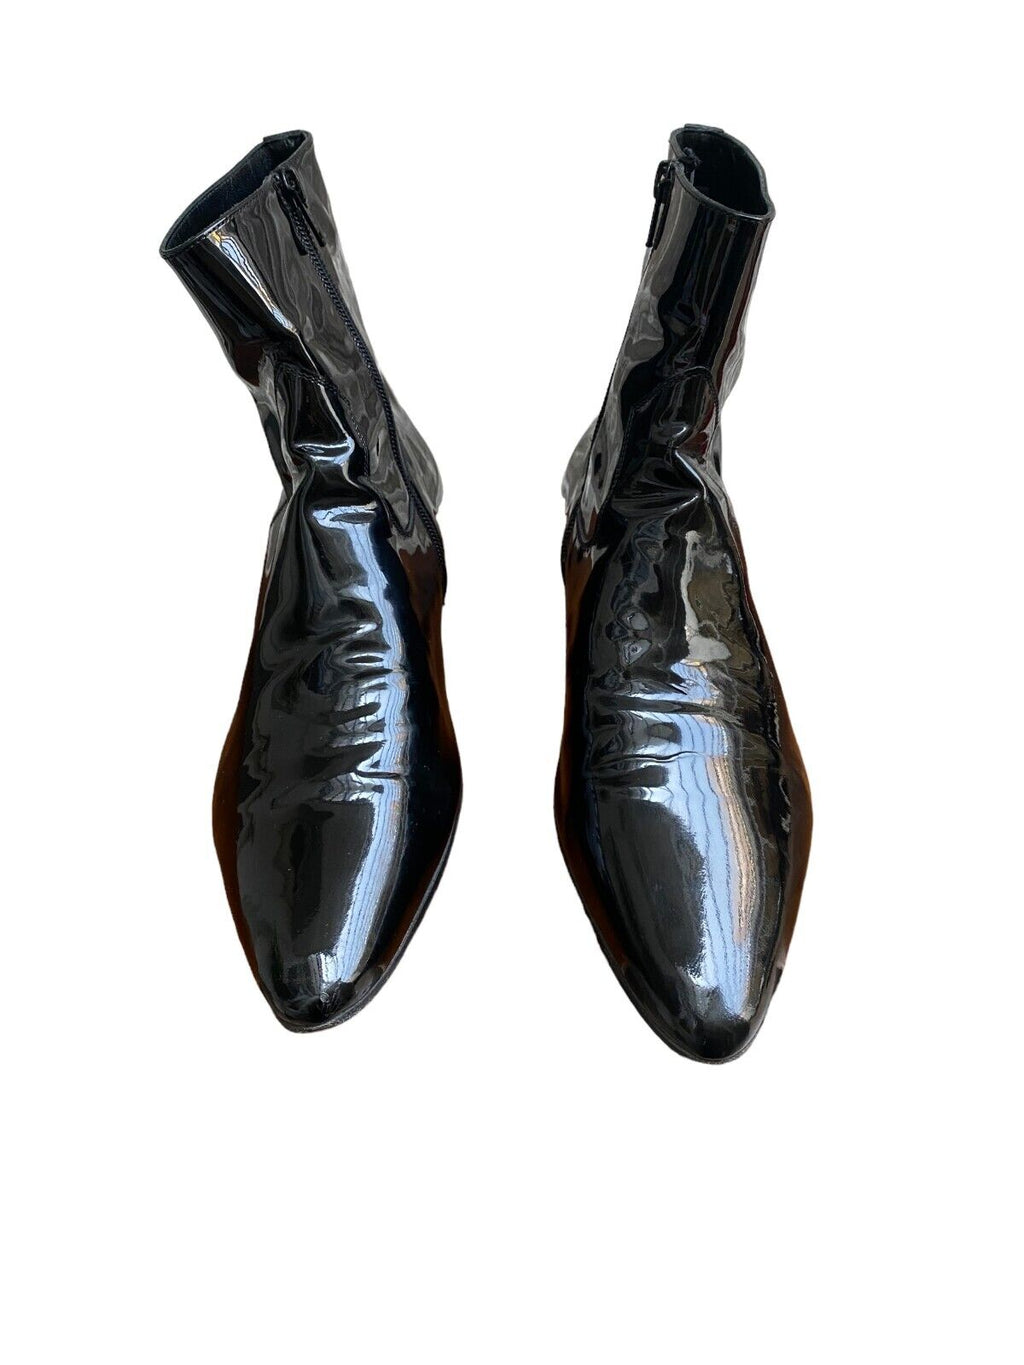 Devon Black Patent Leather Boots by Hedi Slimane